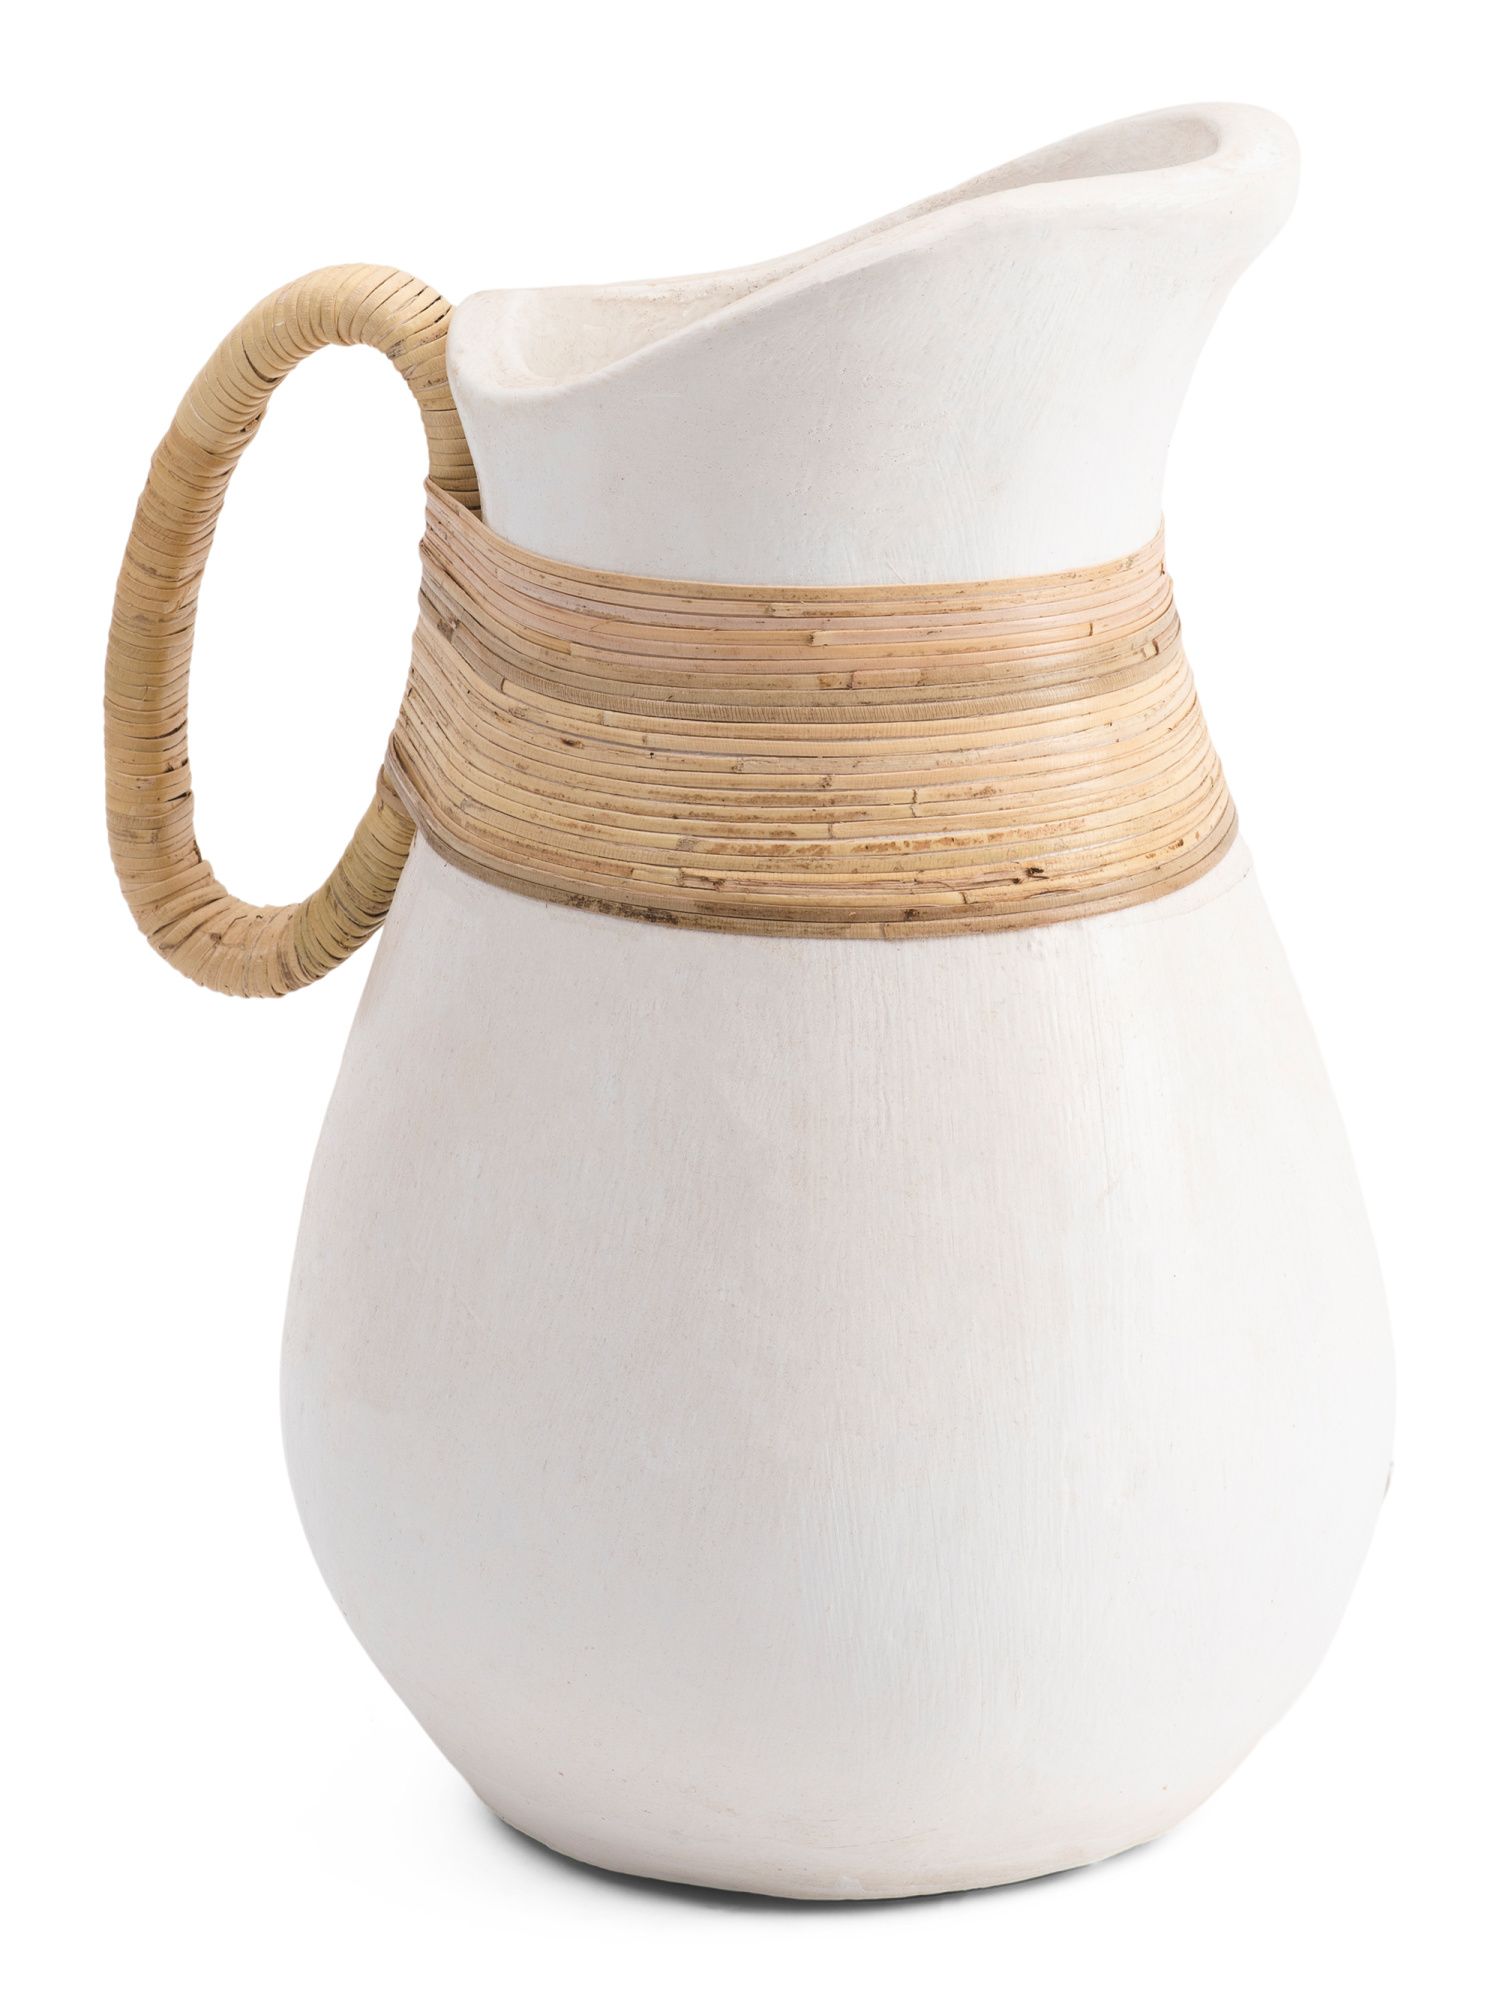 Donlon Vase With Rattan Accent | TJ Maxx